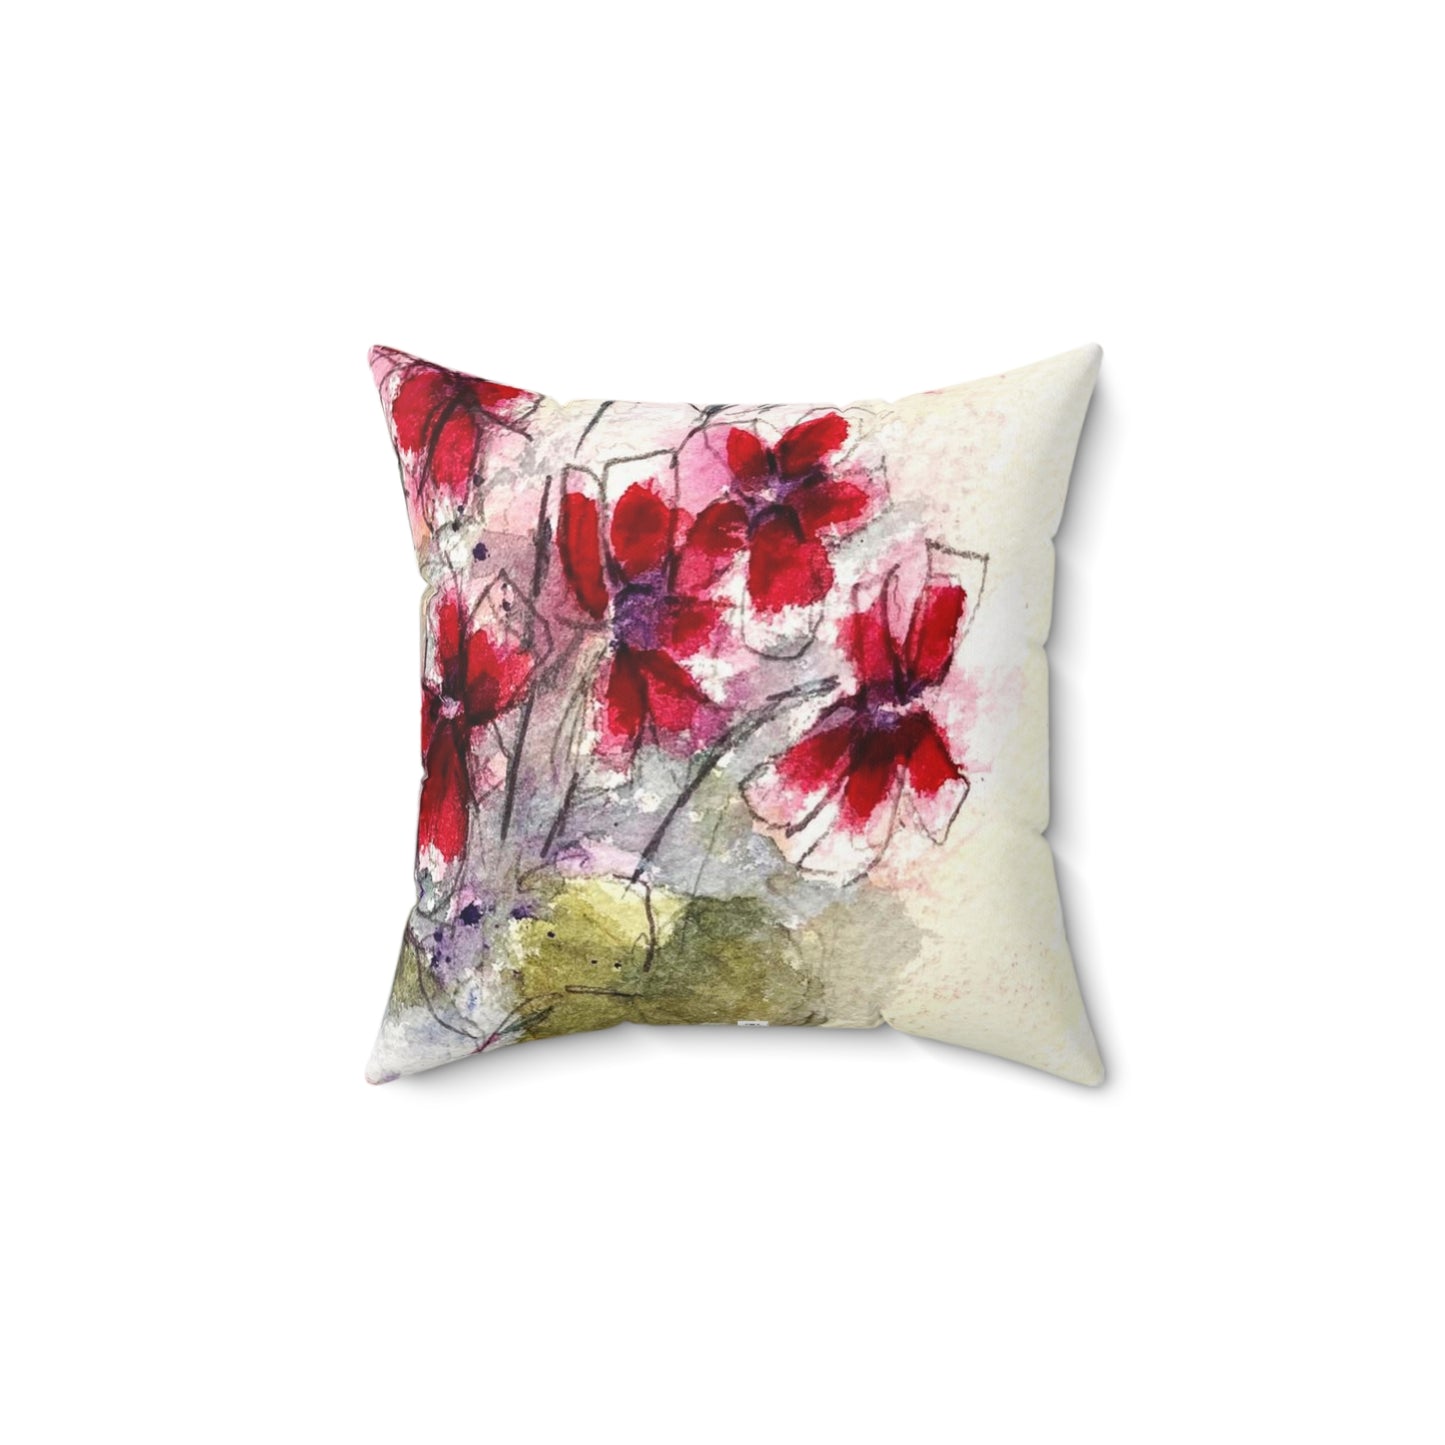 Red Ivy Geraniums Indoor Spun Polyester Square Pillow